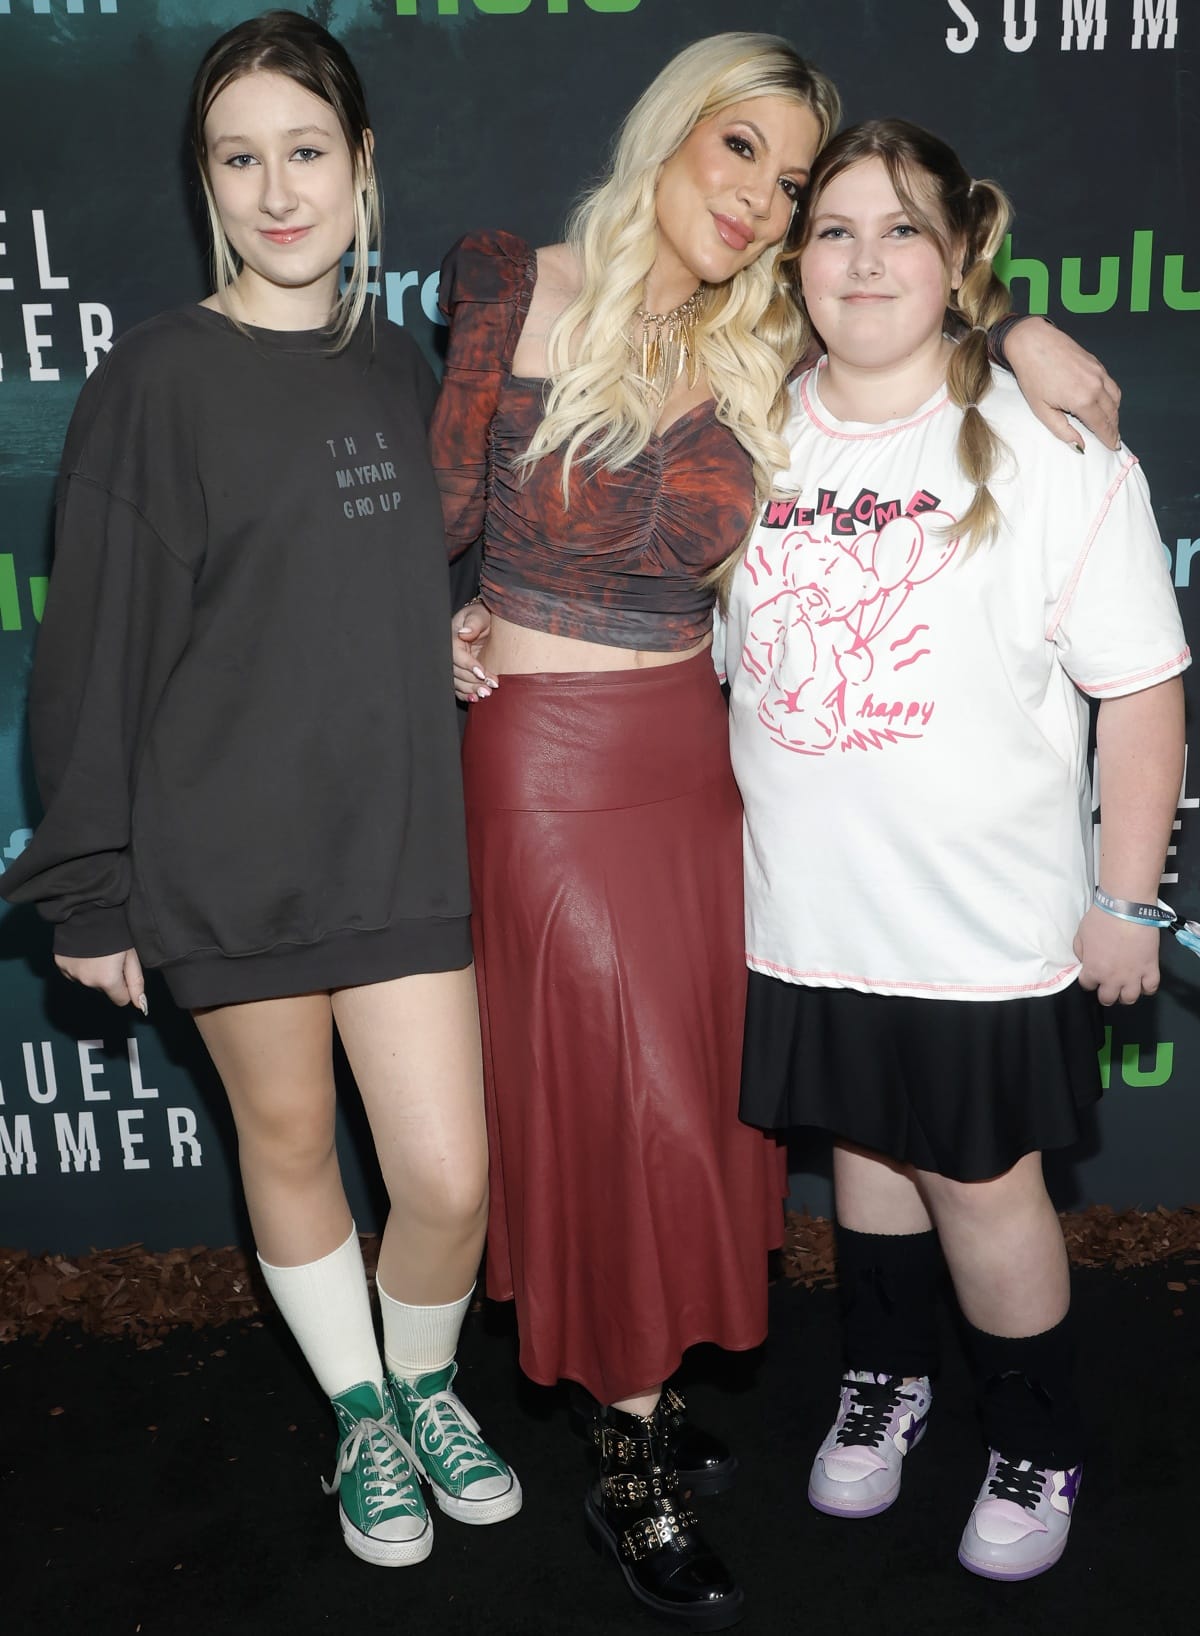 Stella McDermott, Tori Spelling, and Hattie McDermott spending a girls’ night out at the premiere of Cruel Summer Season 2